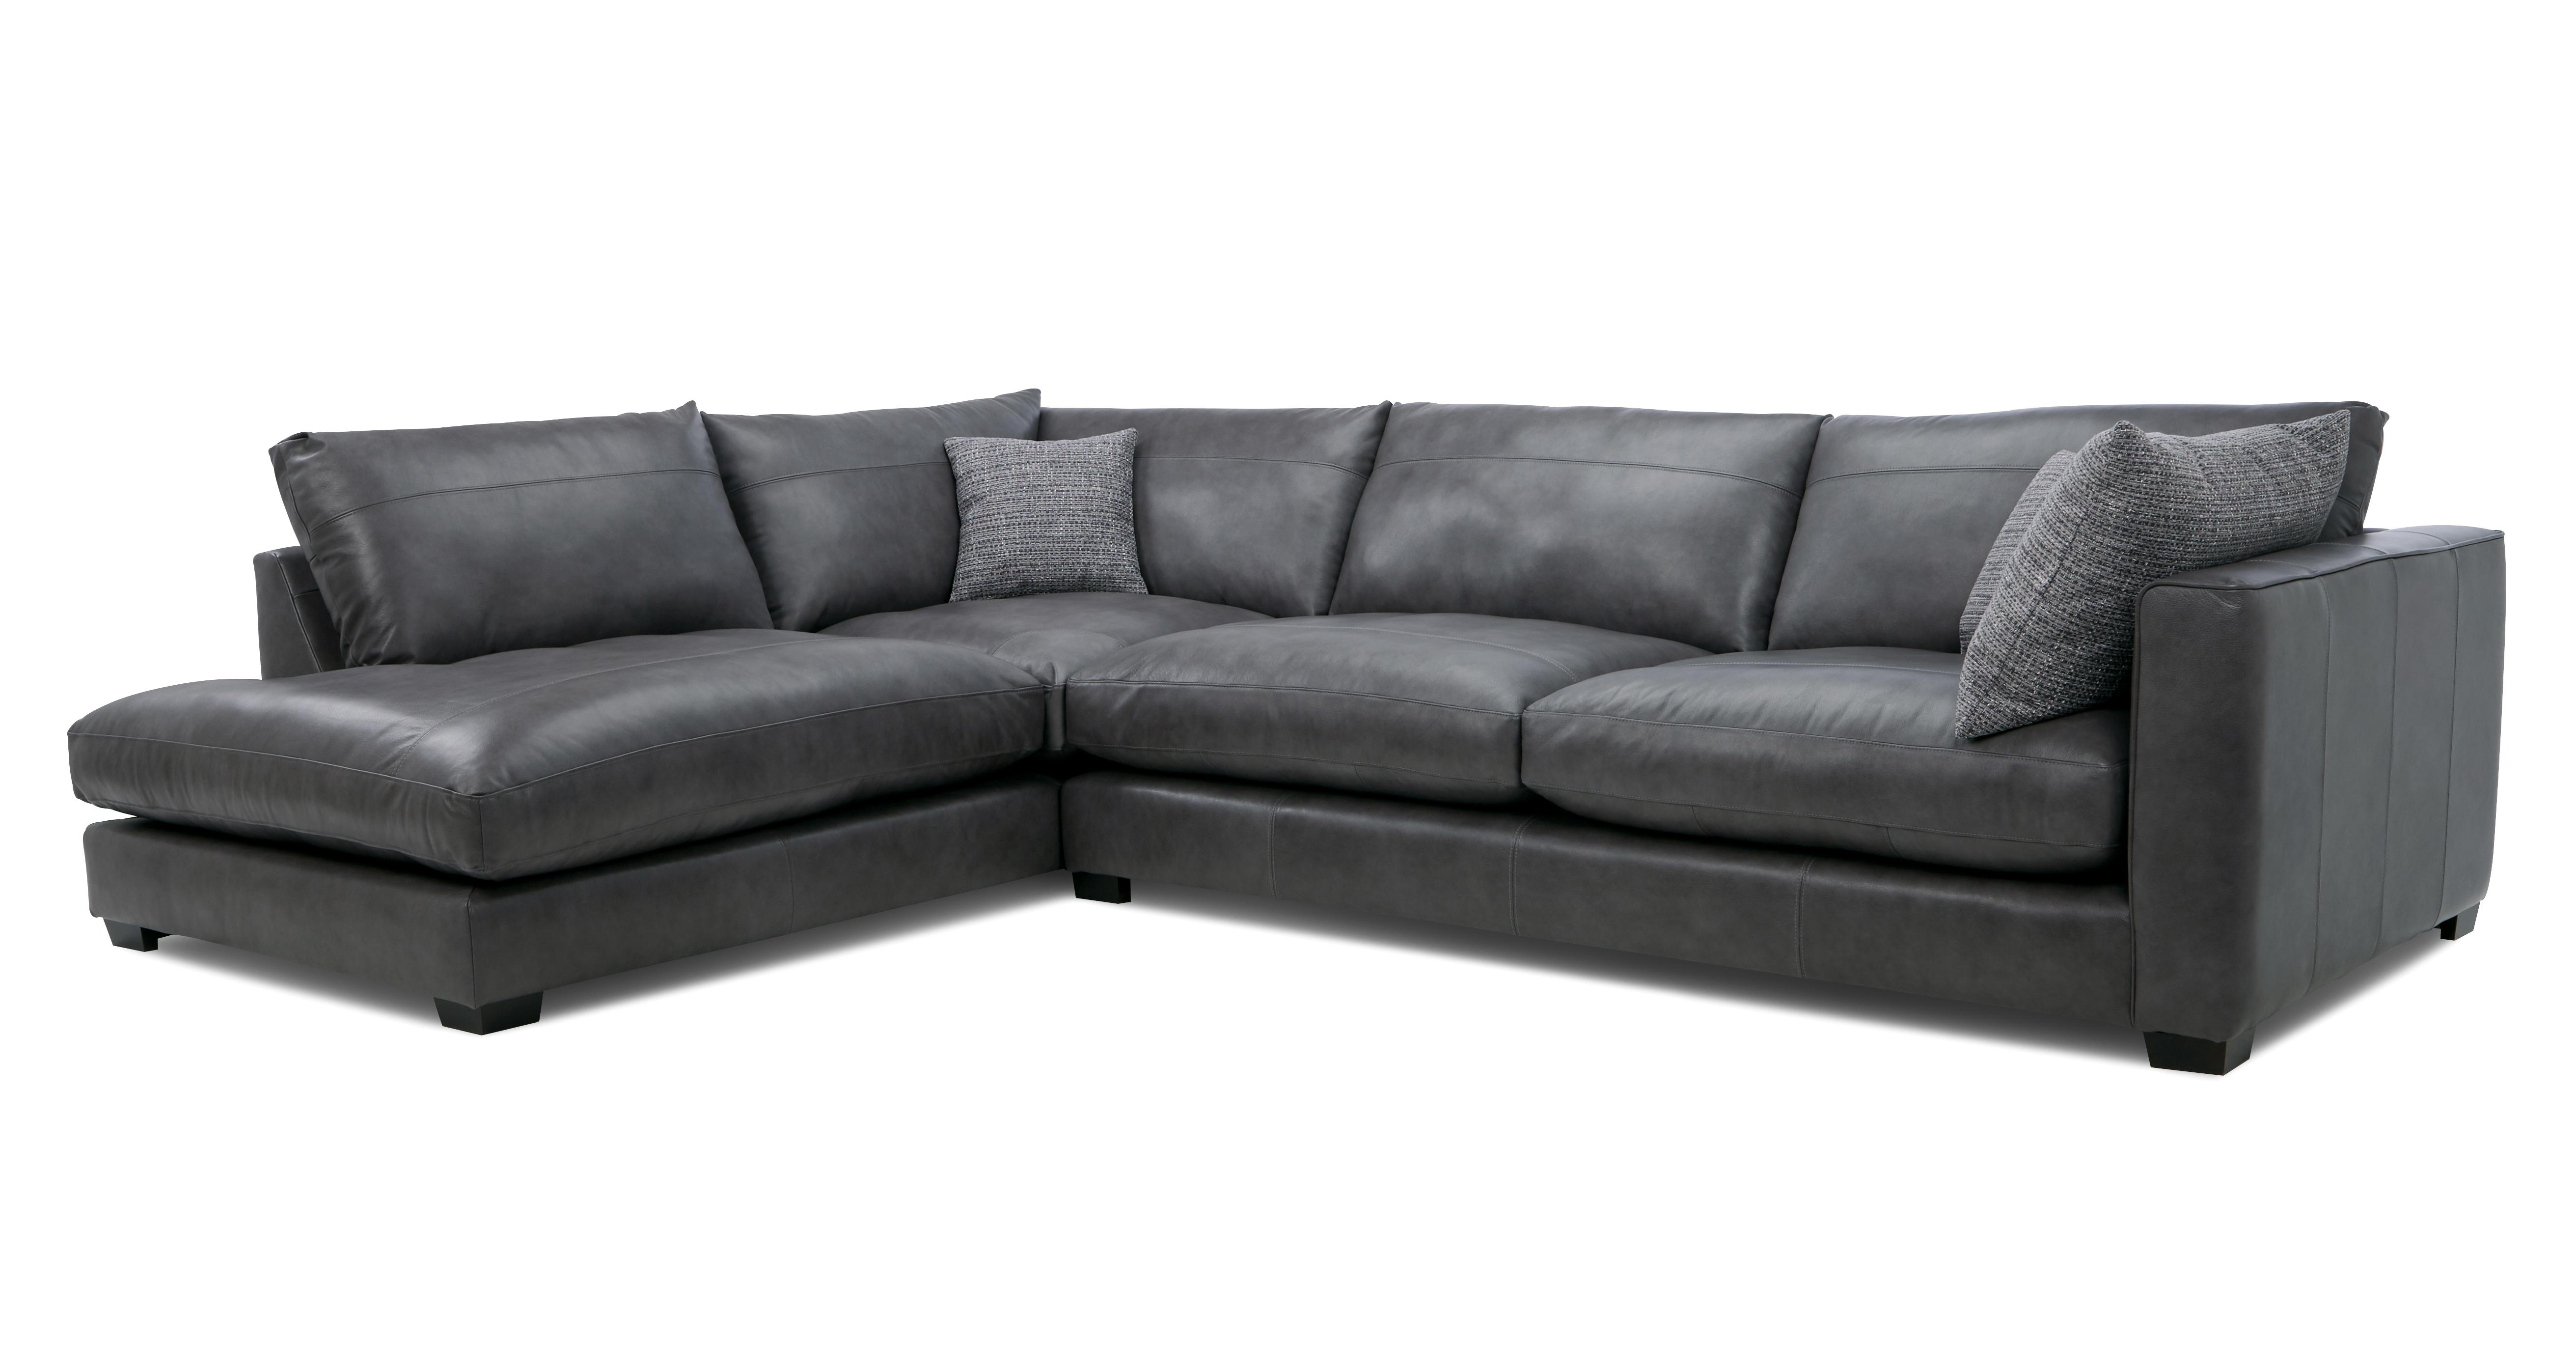 keaton leather sofa reviews